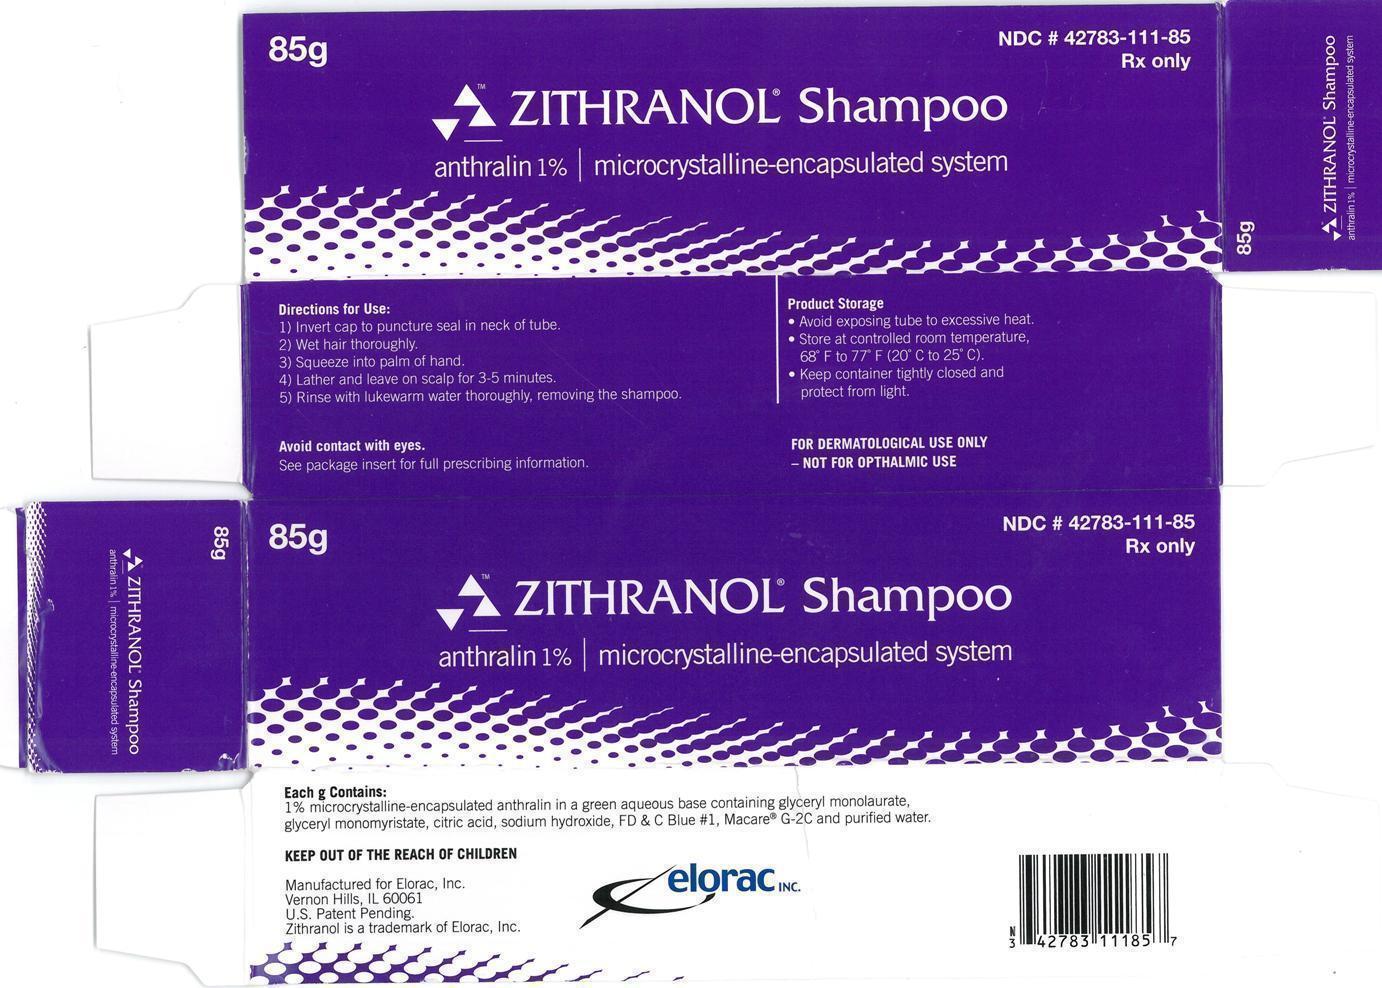 zithranol-shampoo-carton.jpg